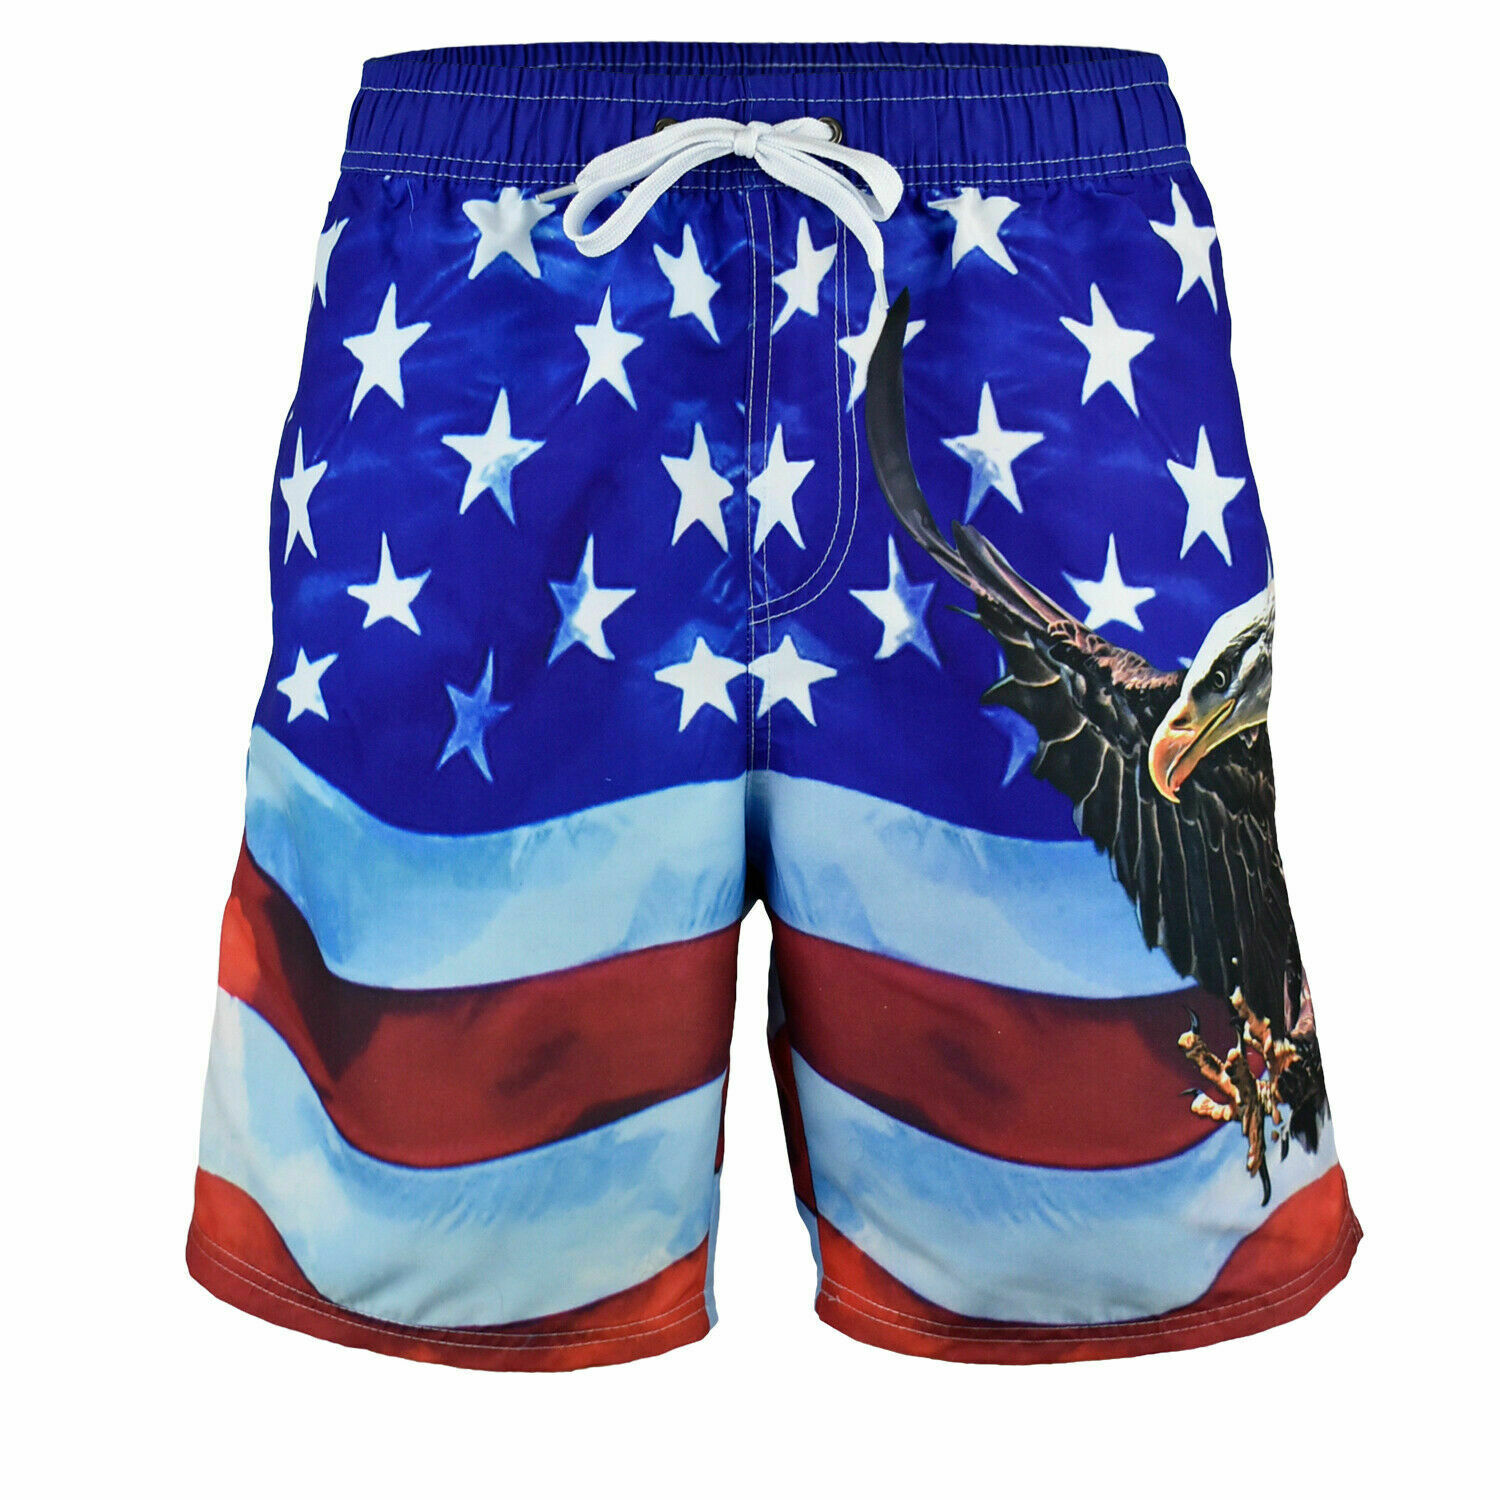 **on Sale** Men’s  American Flag Swim Trunks Board Shorts  Nwt Bald Eagle Design